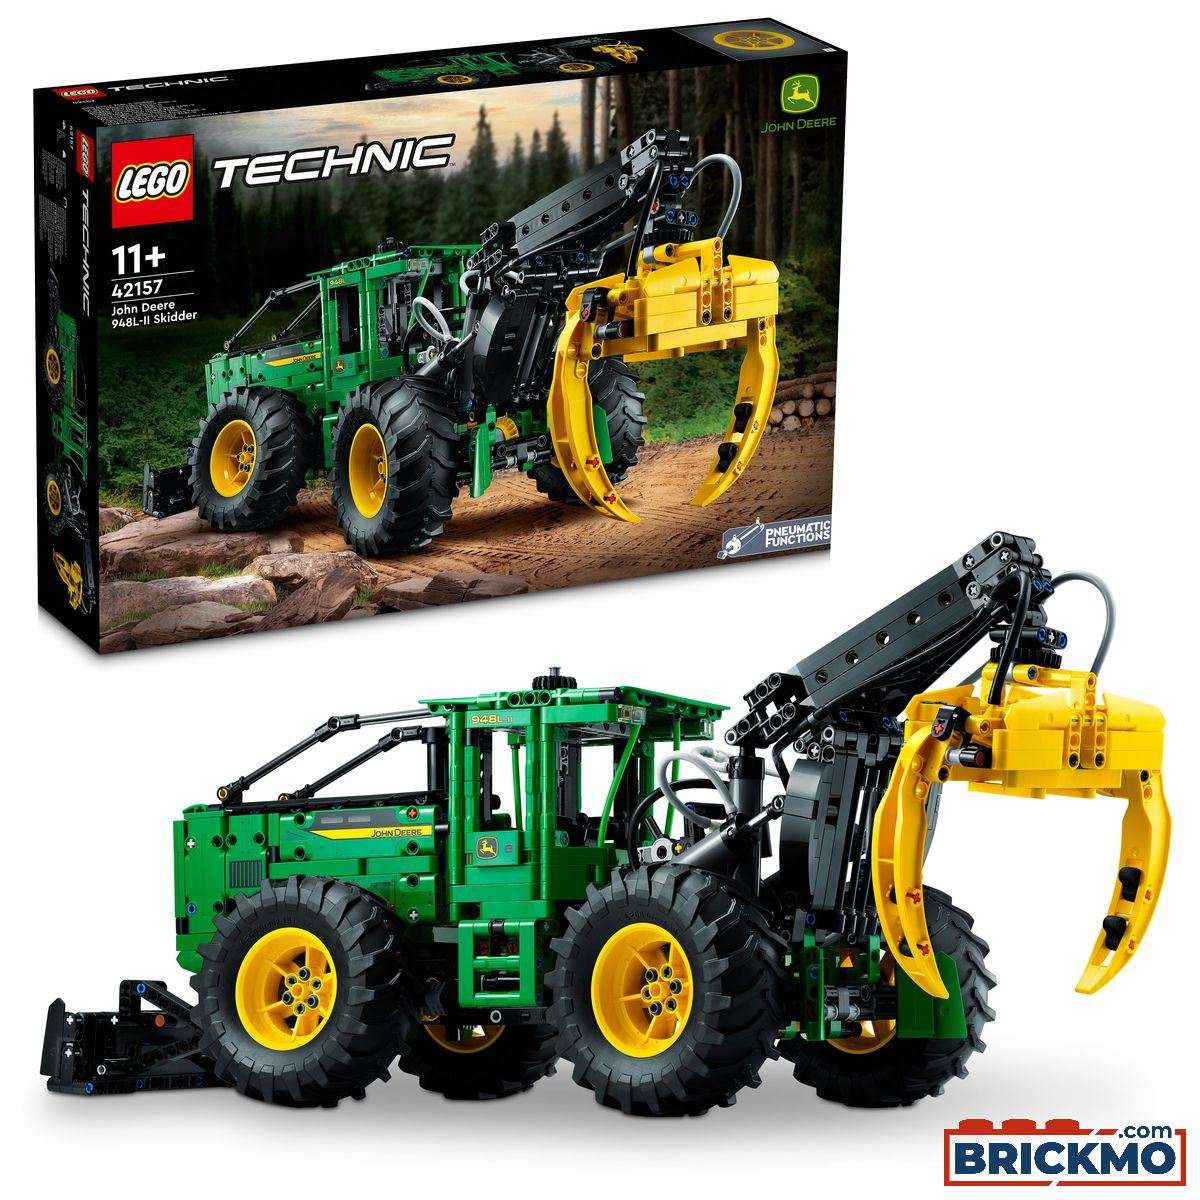 LEGO® Technic™ 42157 John Deere 948L-II Skidder Playset - Worldshop